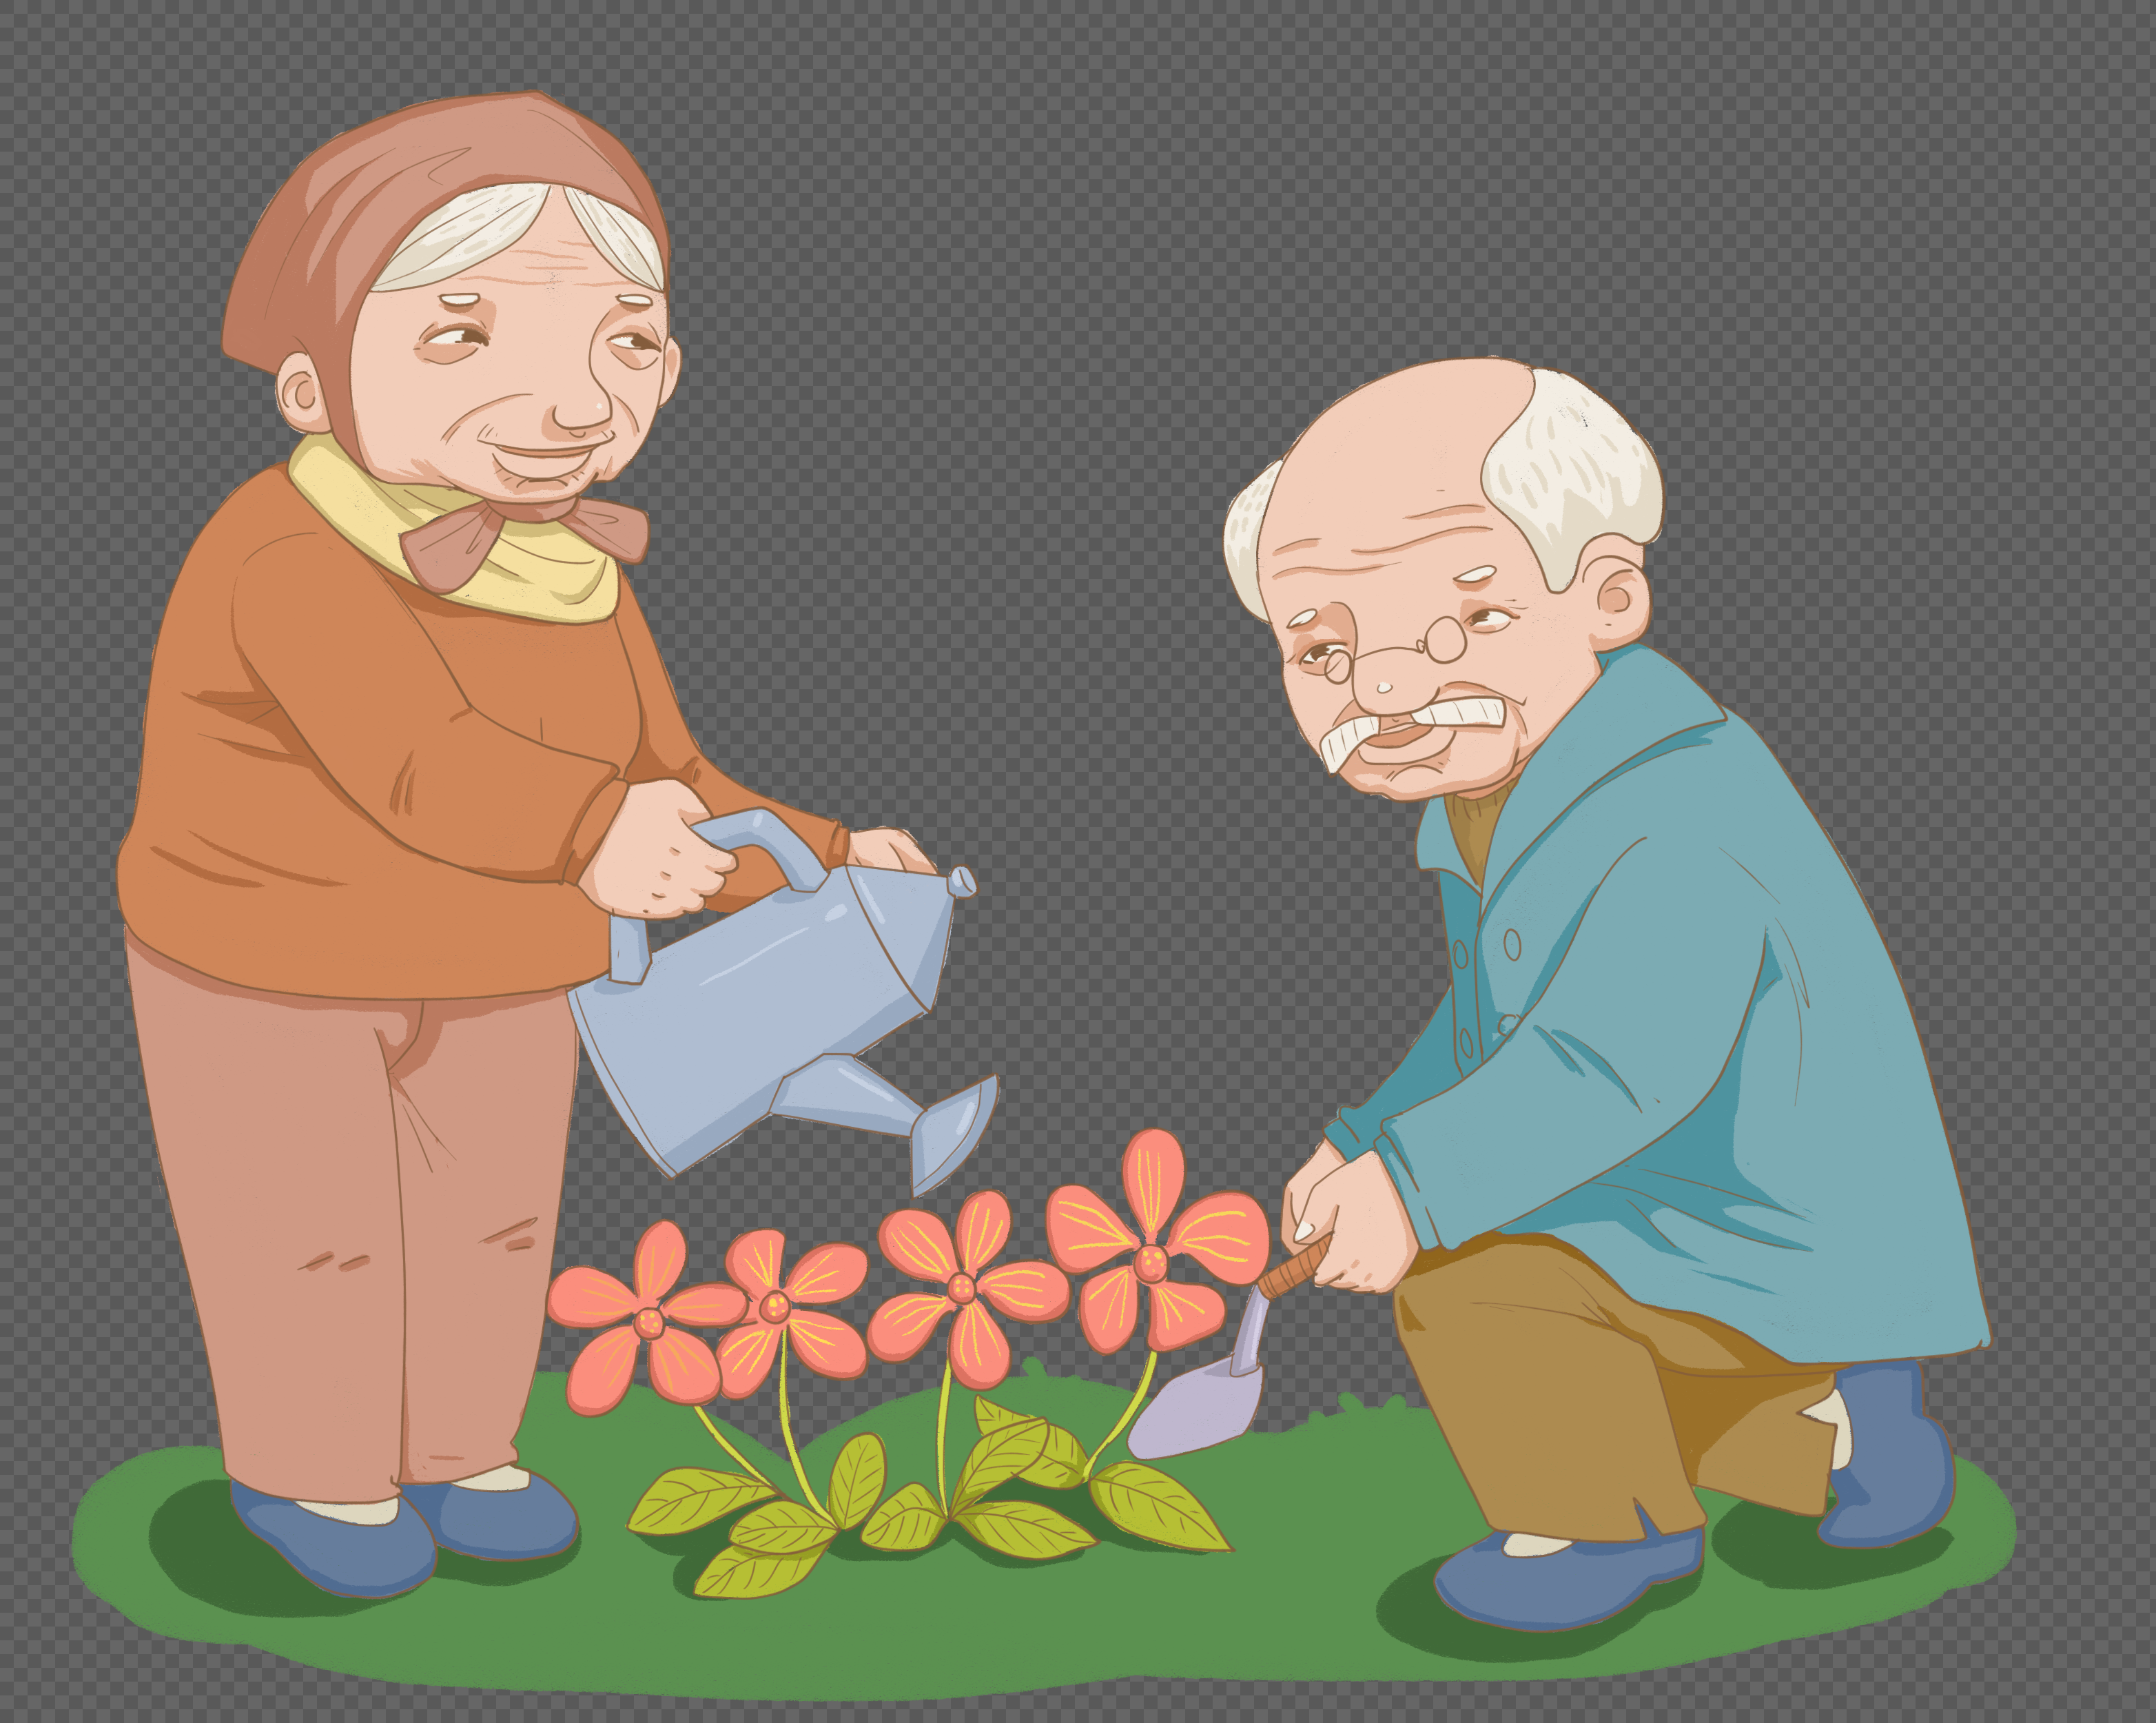 Дедушка посадил дерево 54. Бабушка сажает цветы. Бабушка и дедушка садят растение. Бабуля сажает цветы иллюстрации. Рисунок дедушки цветочки.